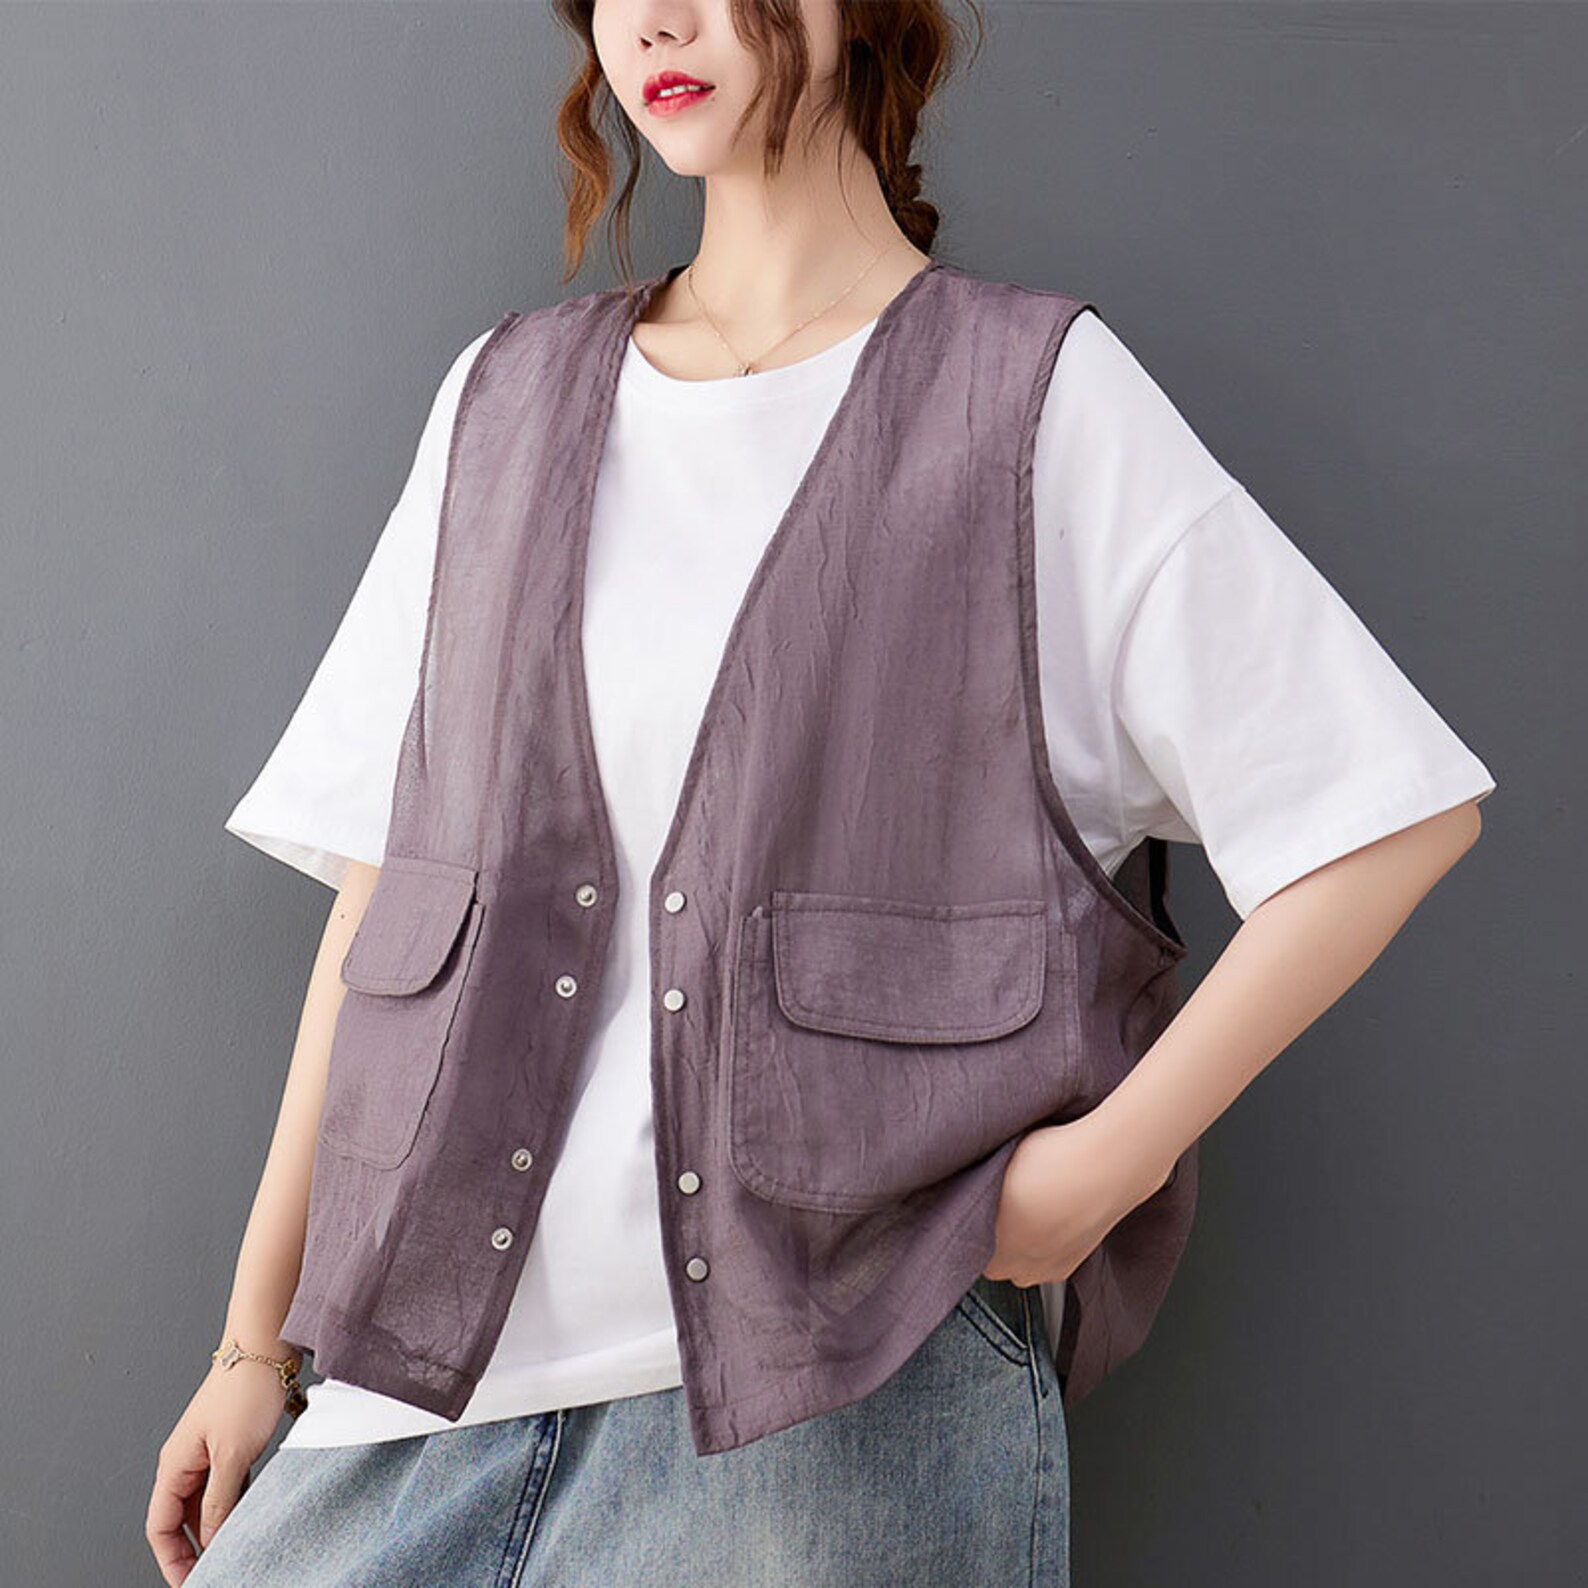 Thin Linen Vest/ Summer Vintage Vest/ Casual Linen Clothing/ - Etsy